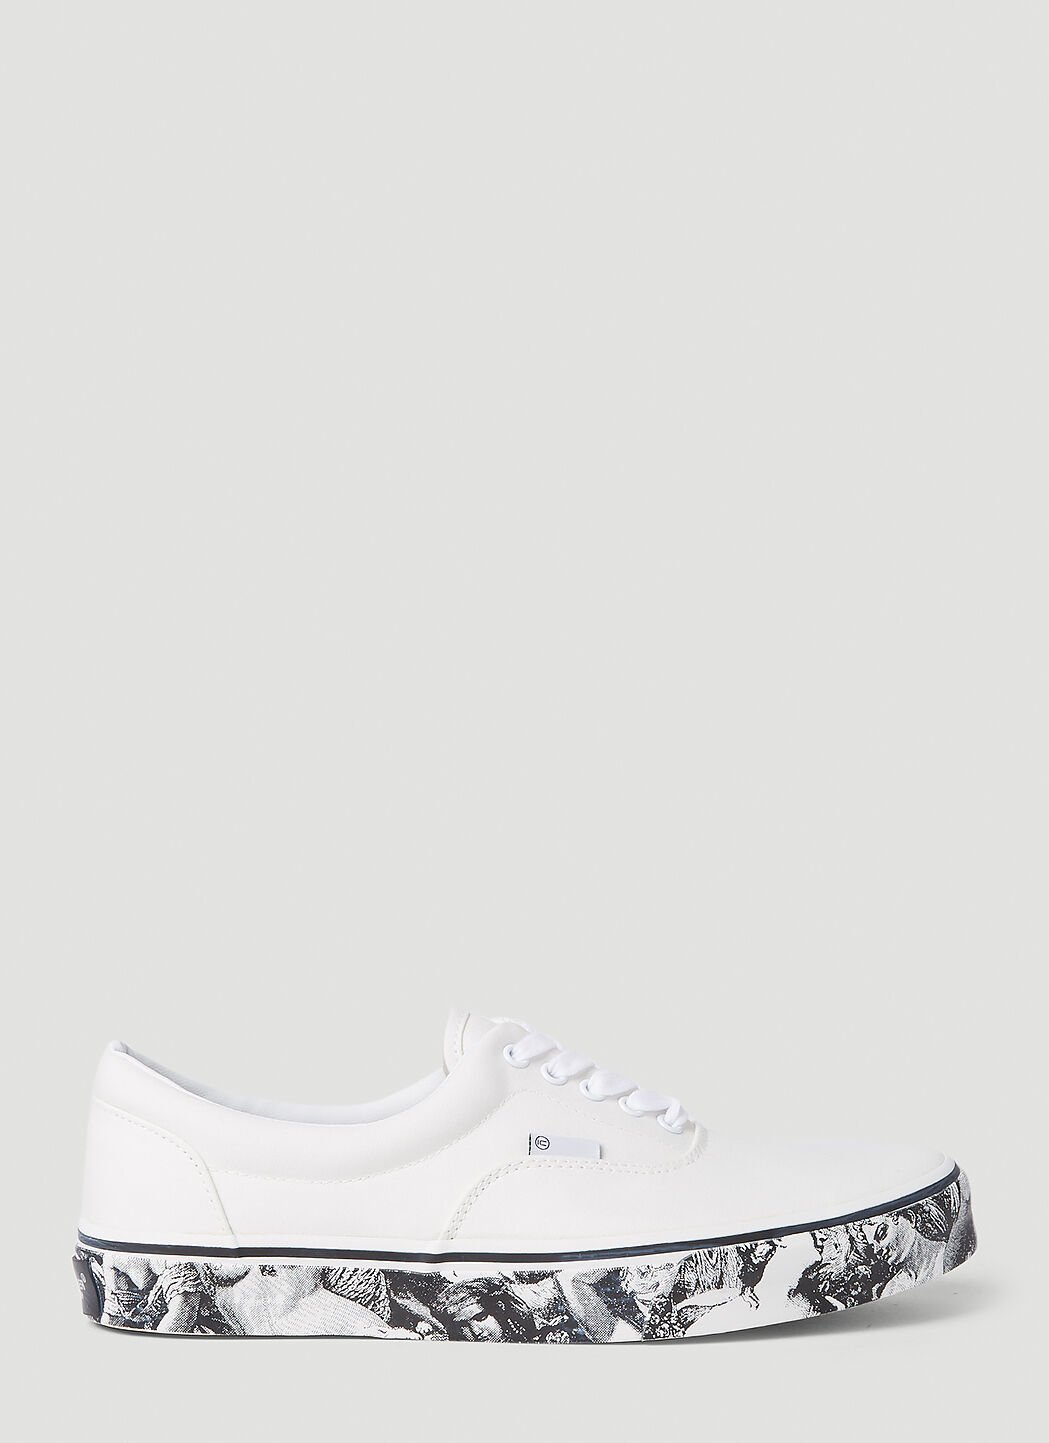 UNDERCOVER Shoes White und0153001